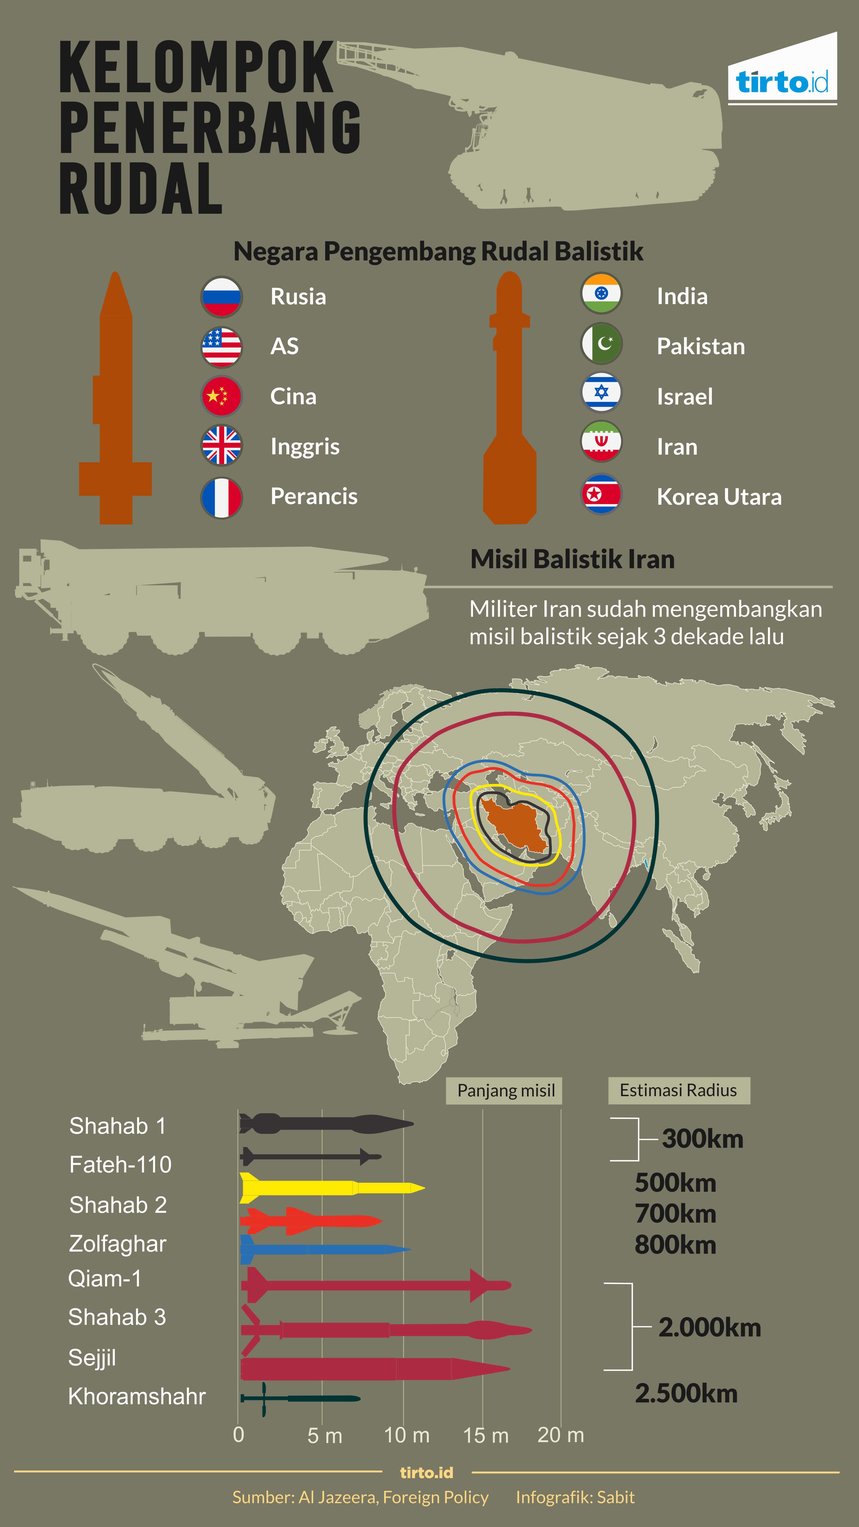 Infografik Kelompok Penerbang Rudal rev